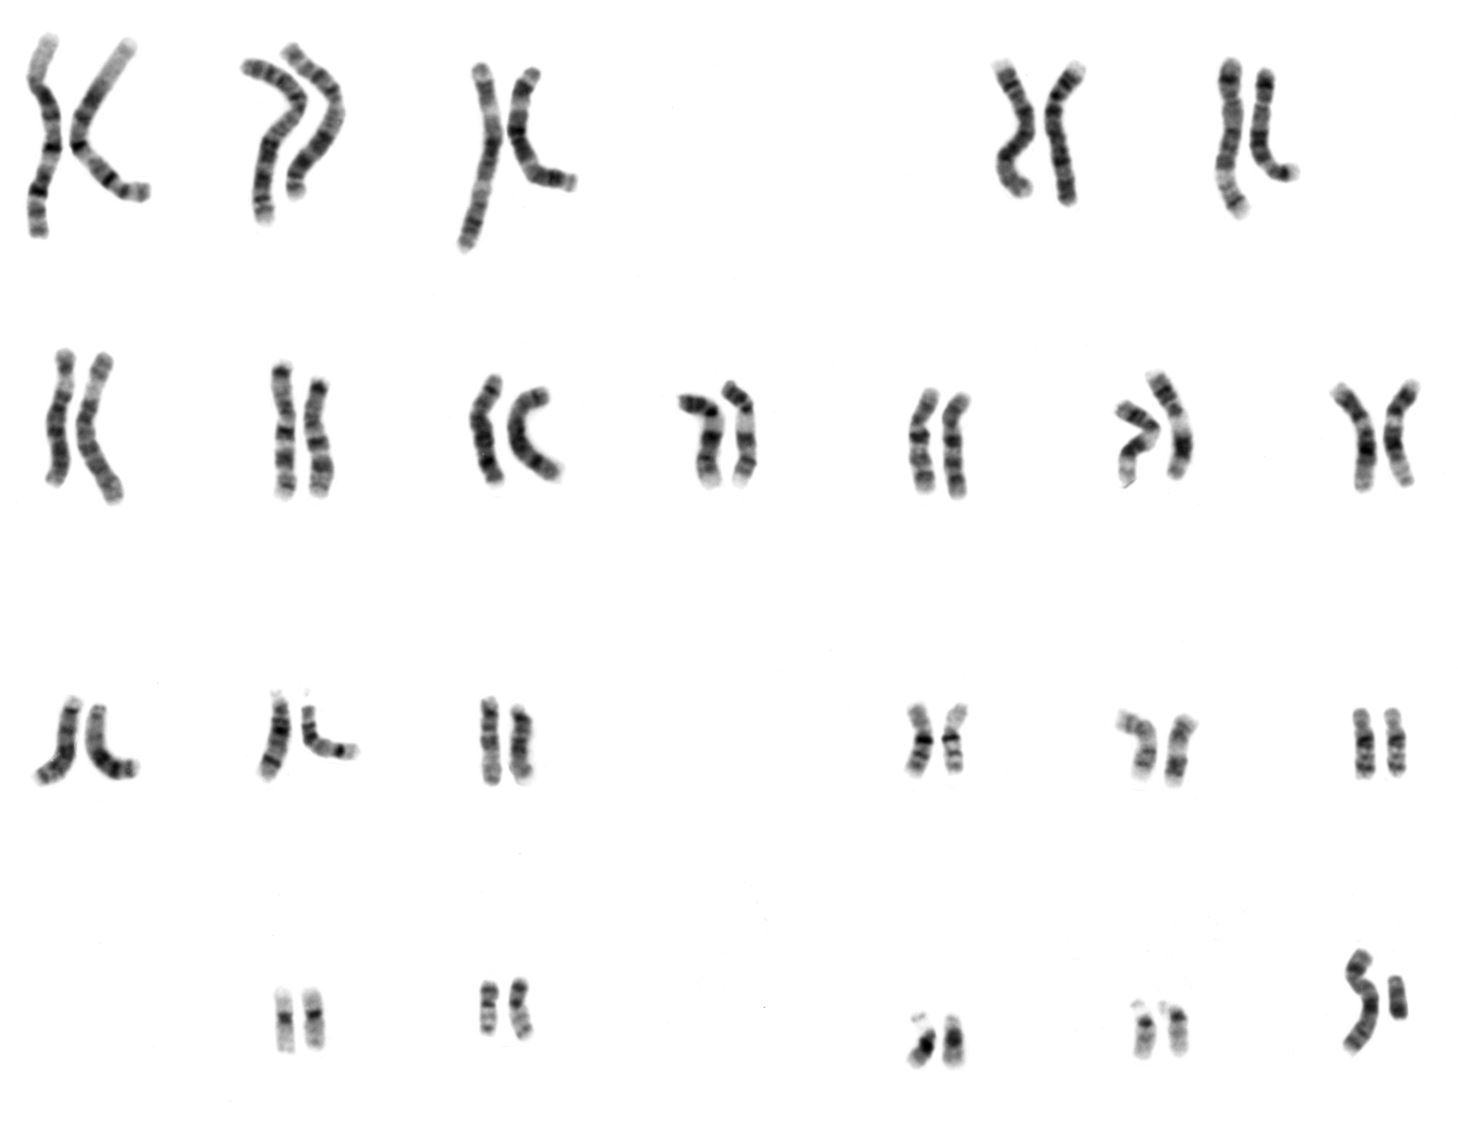 insan kromozomu 46 diploid